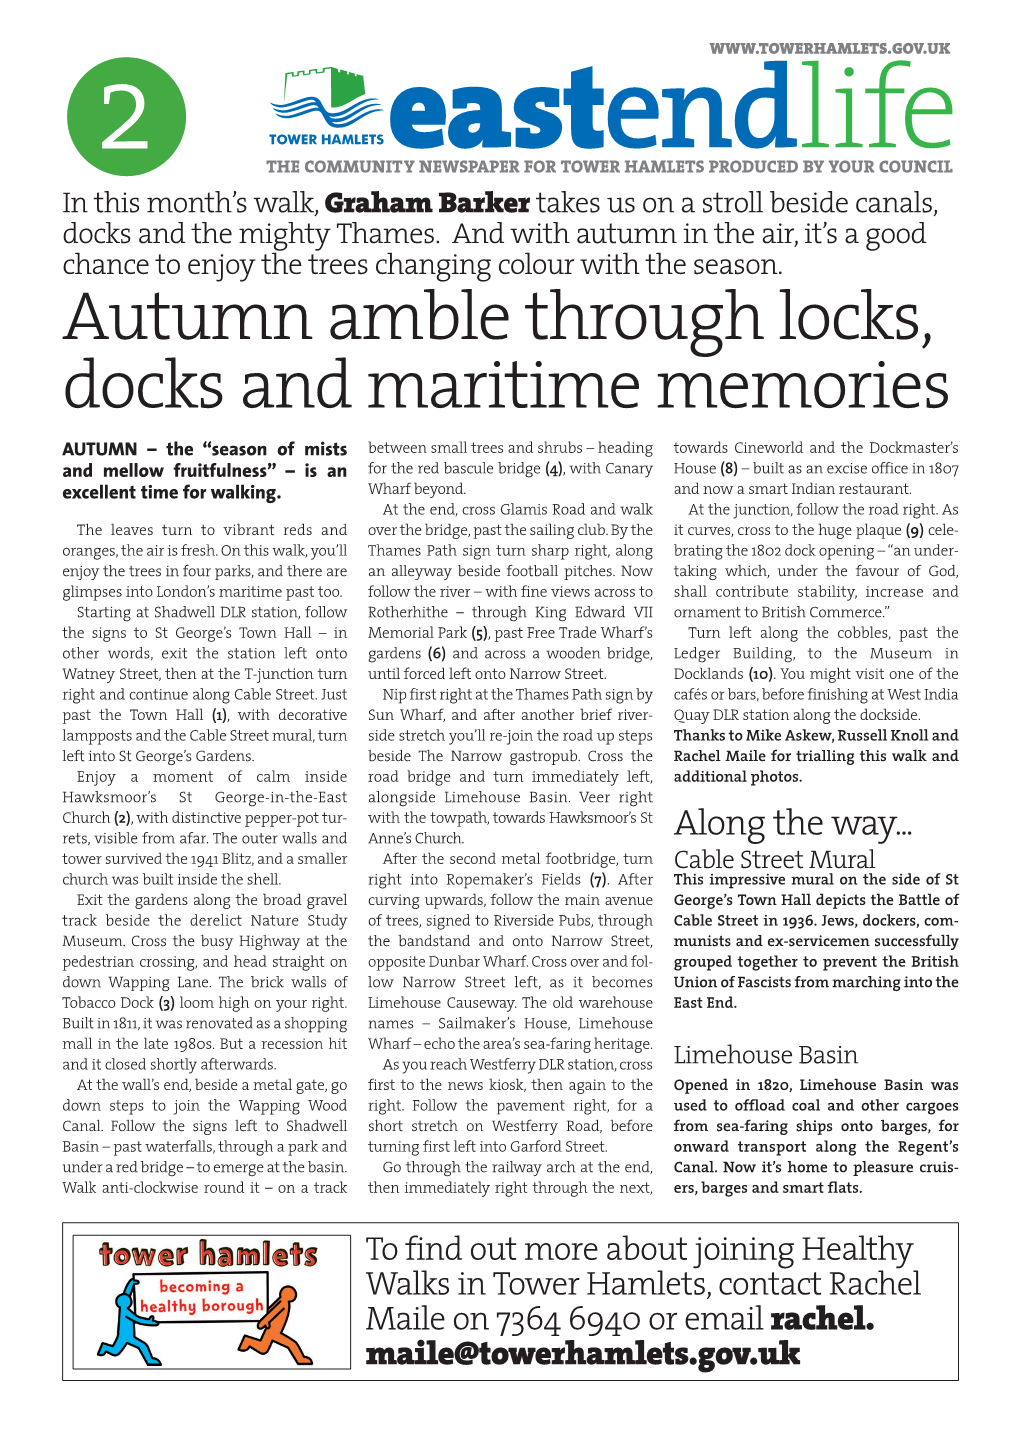 Autumn Amble Through Locks, Docks and Maritime Memories